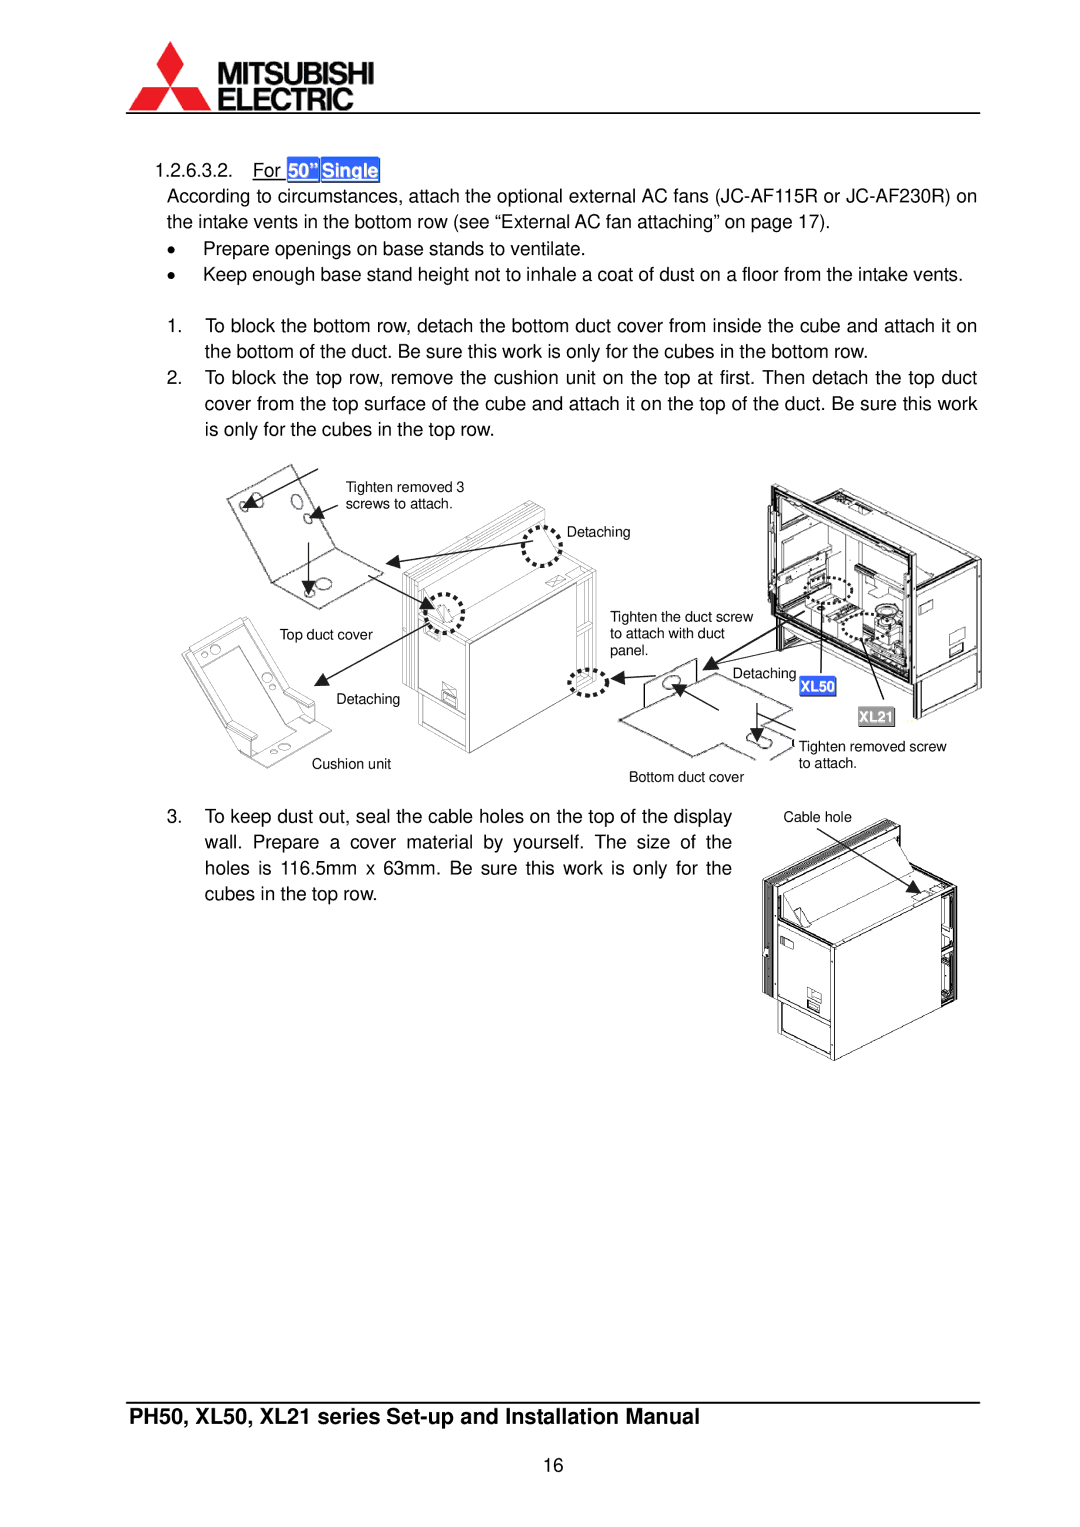 Mitsubishi Electronics XL50, XL21 installation manual For 50 Single 